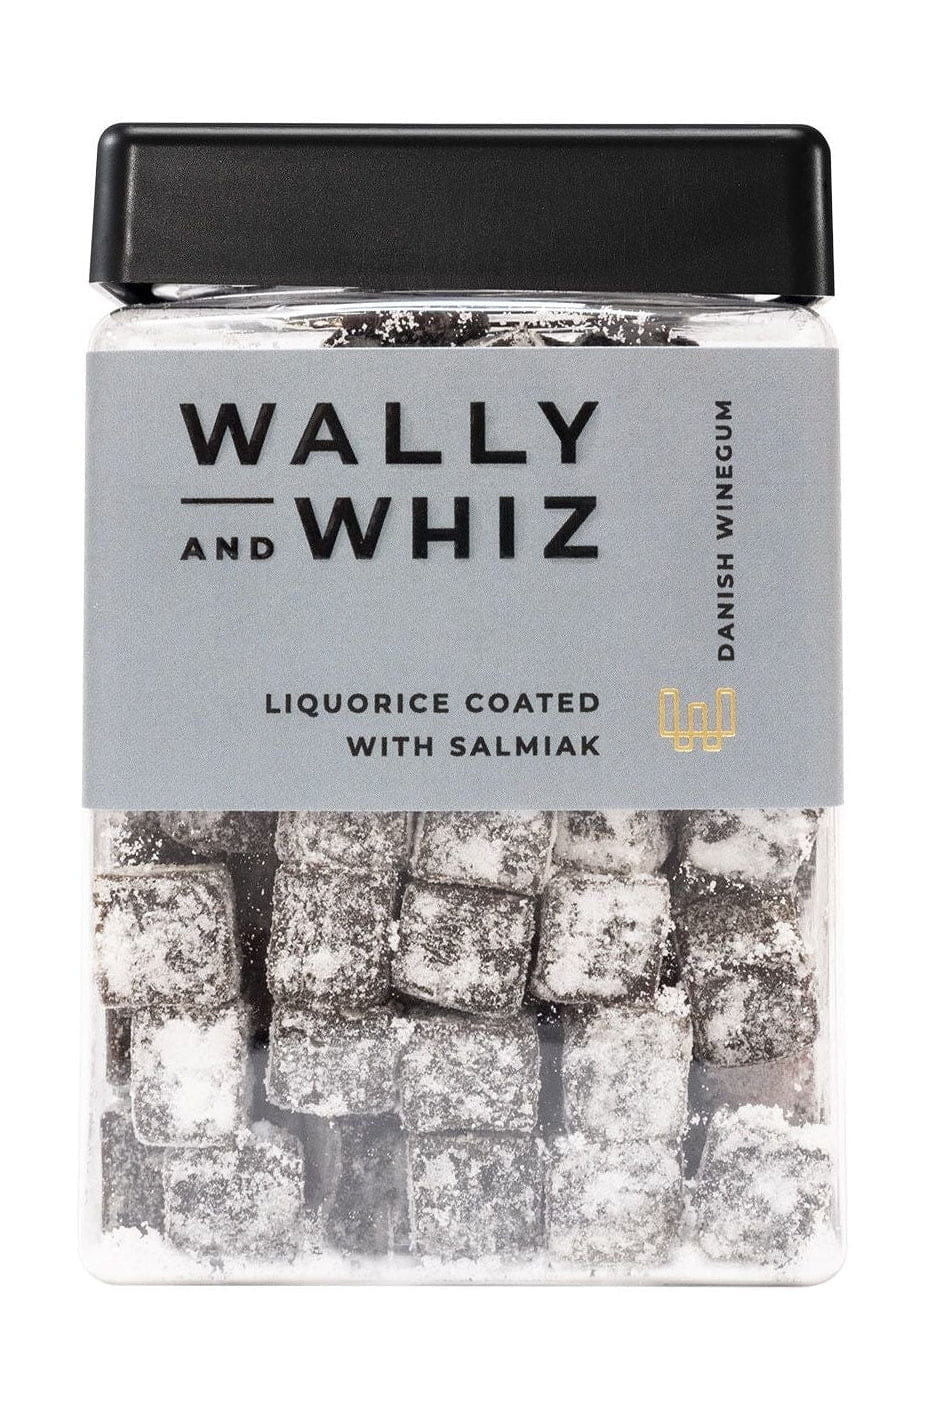 Wally And Whiz Wijngomkubus, zoethout fruitgom met Salmiak, 240 g